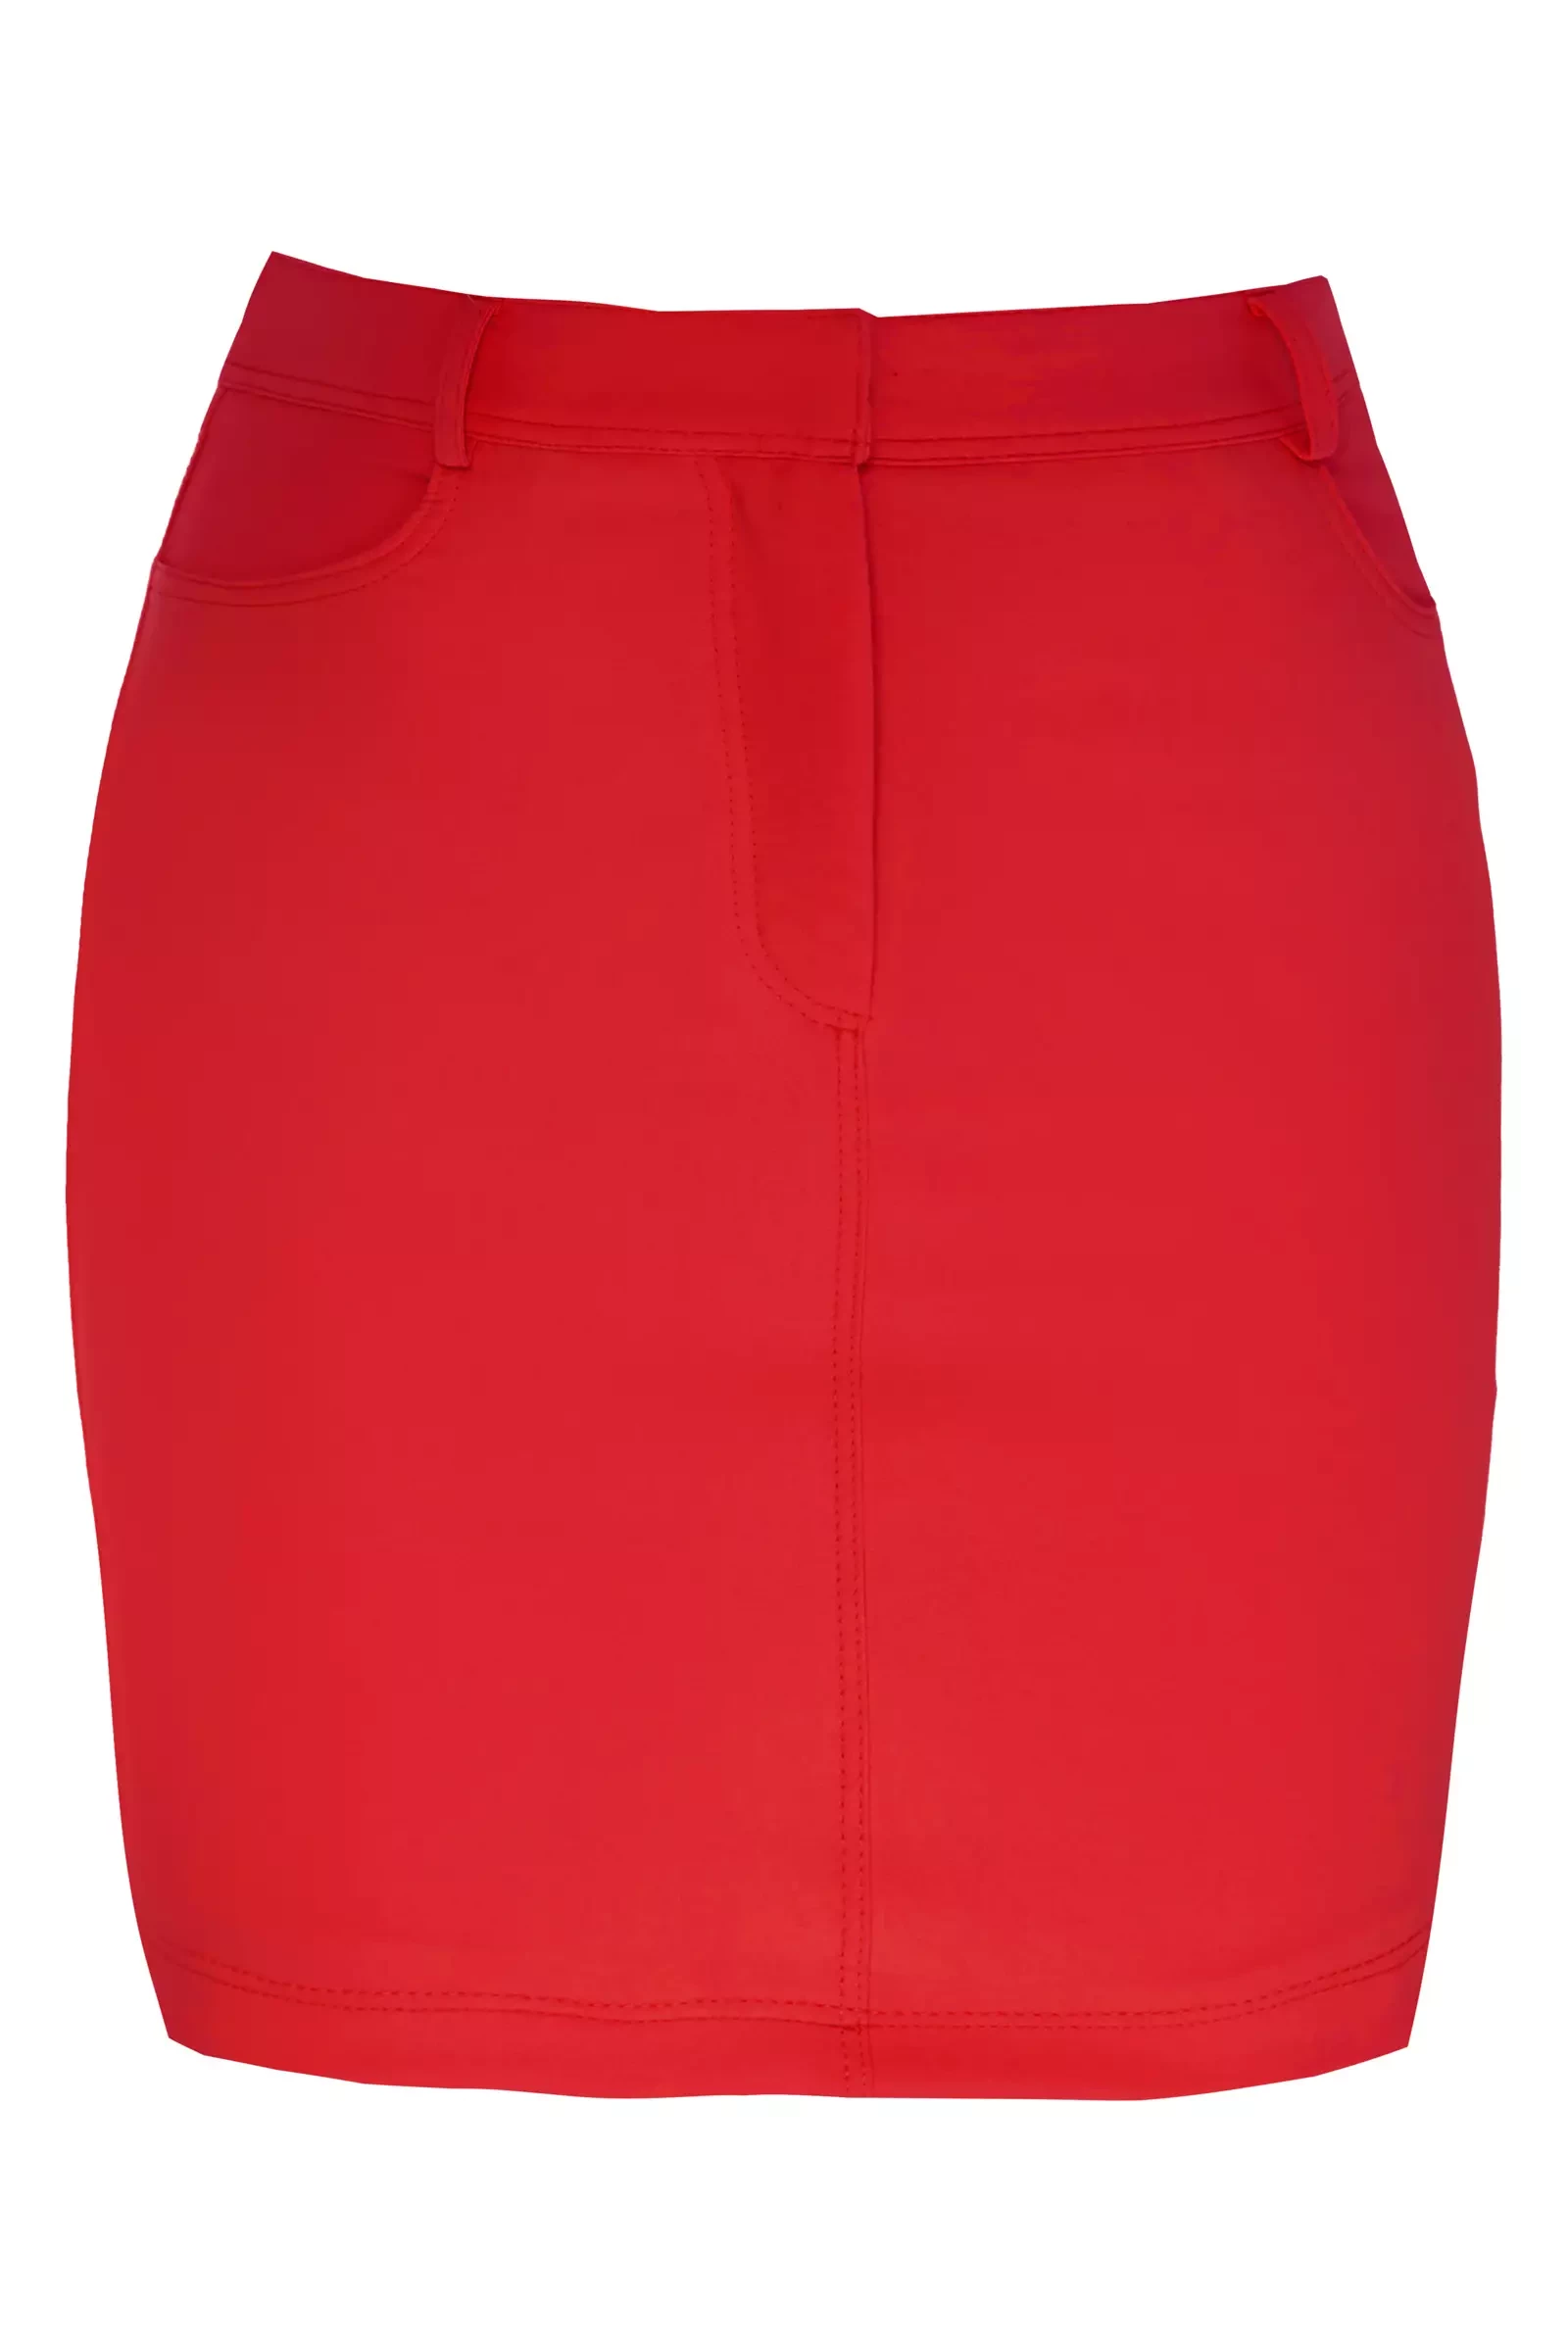 Red crepe mini skirt